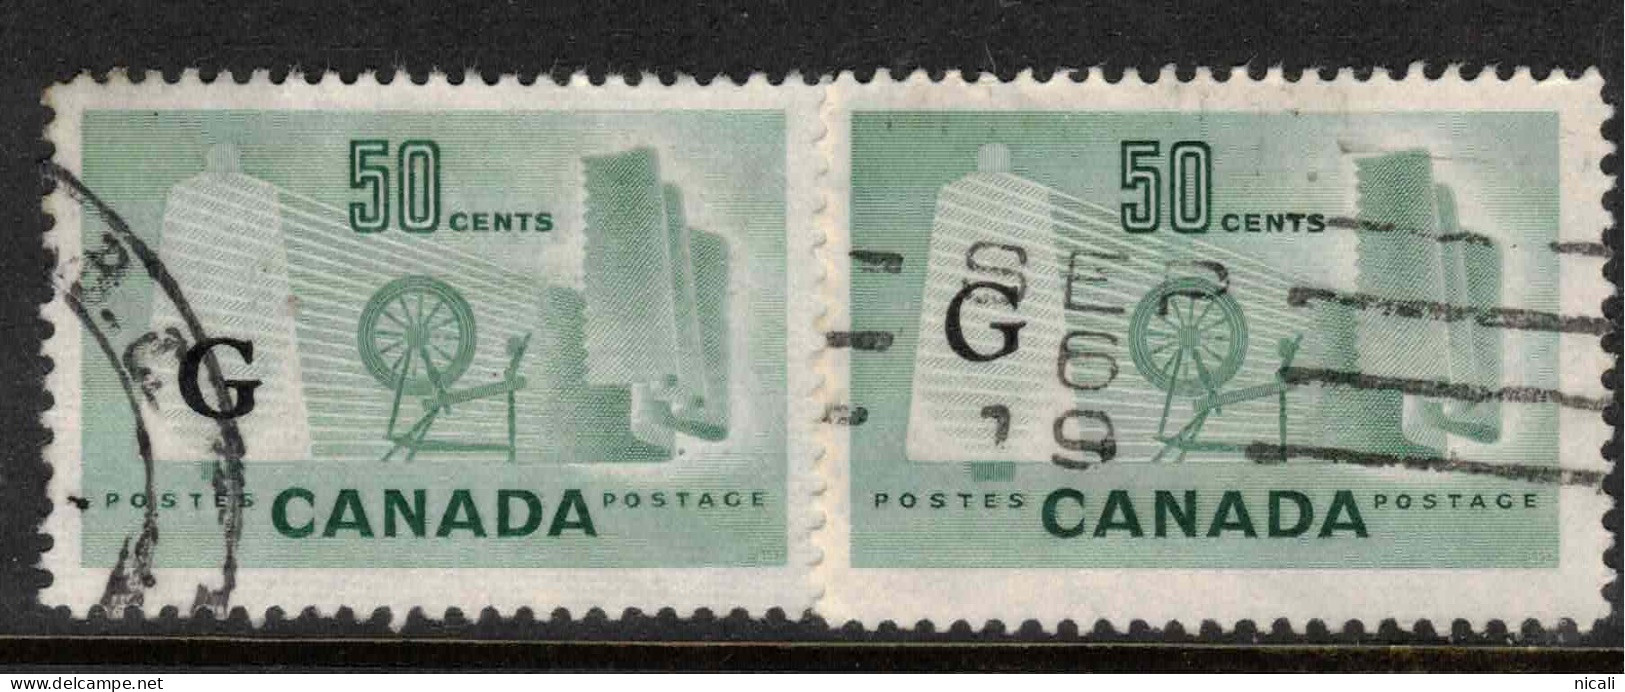 CANADA 1953 50c Textile Industry Official Types O4 And O6 SG O201, O201a U ZZ75 - Overprinted